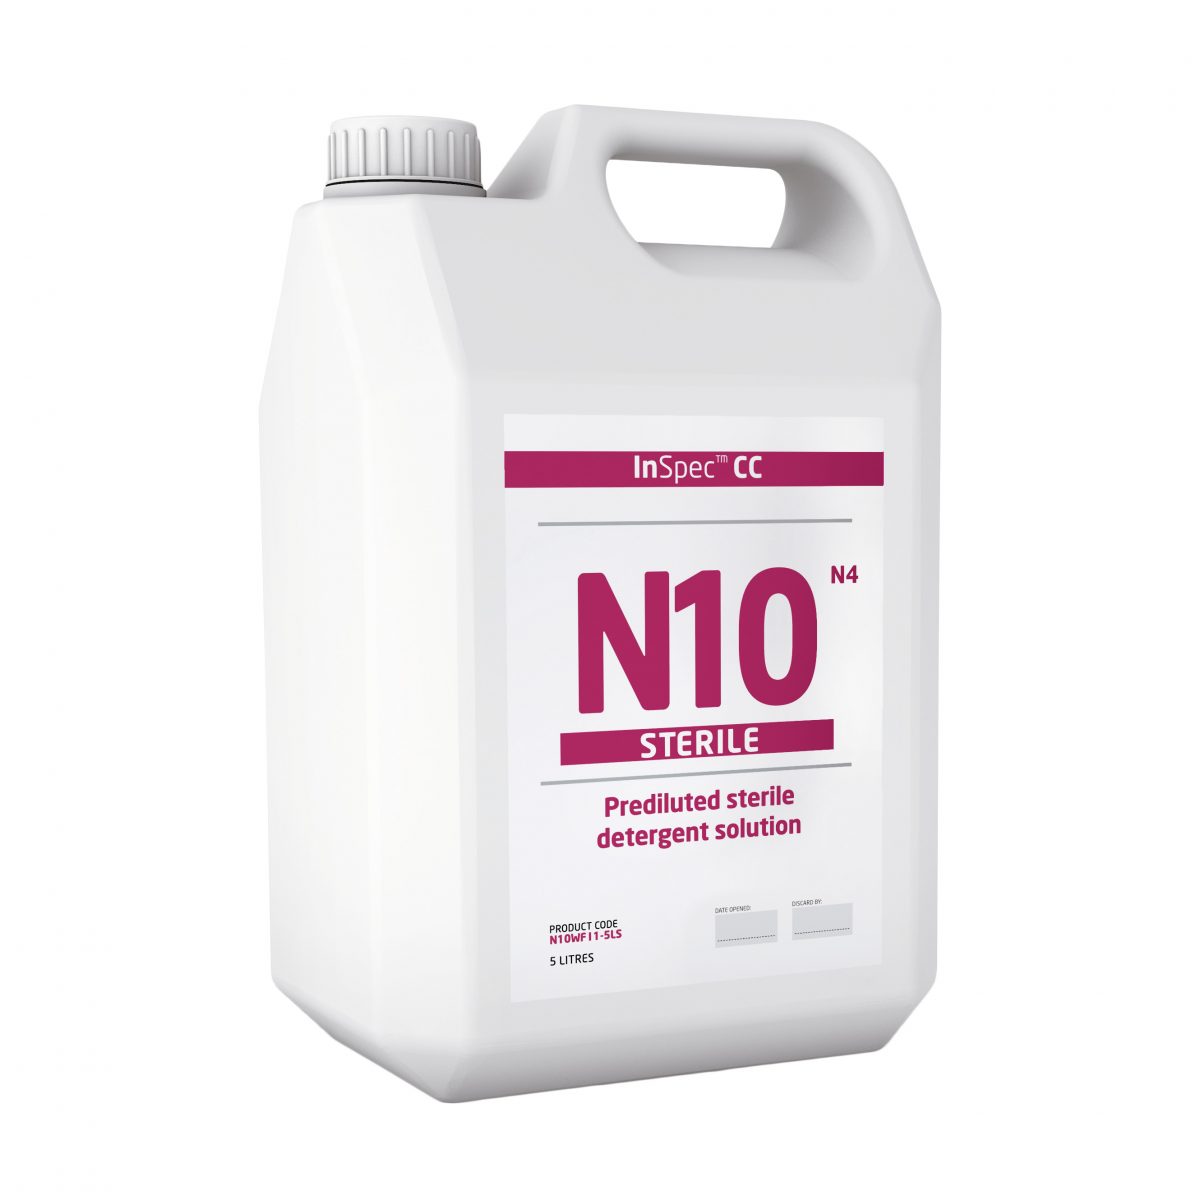 N10 Sterile 5 litre Carton - Integrity